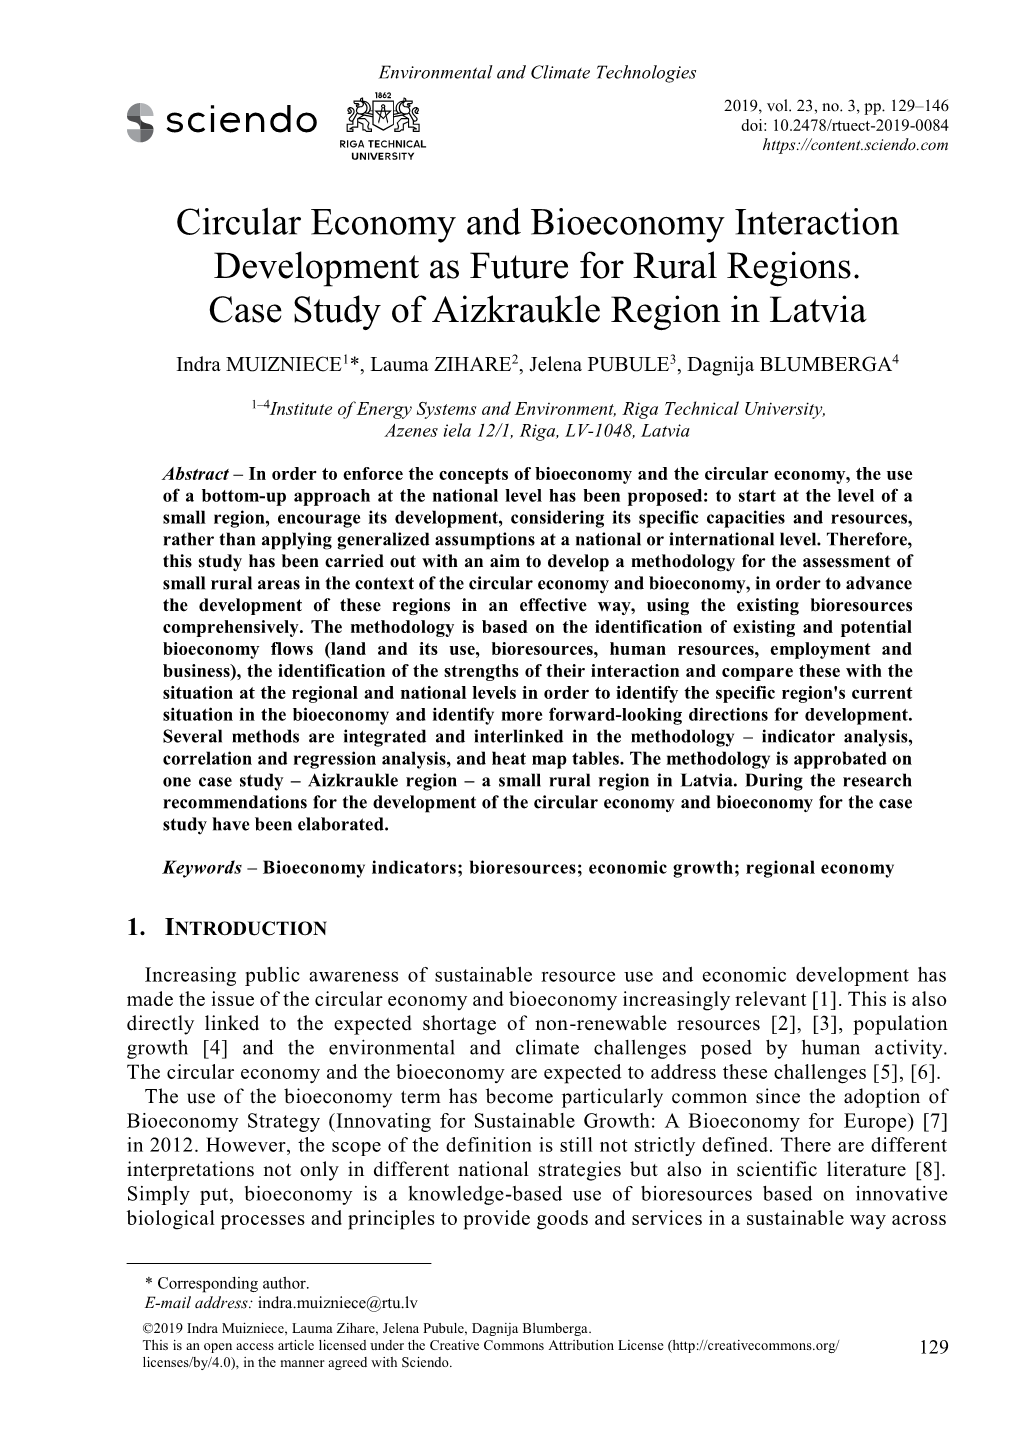 Circular Economy and Bioeconomy Interaction Development As Future for Rural Regions. Case Study of Aizkraukle Region in Latvia